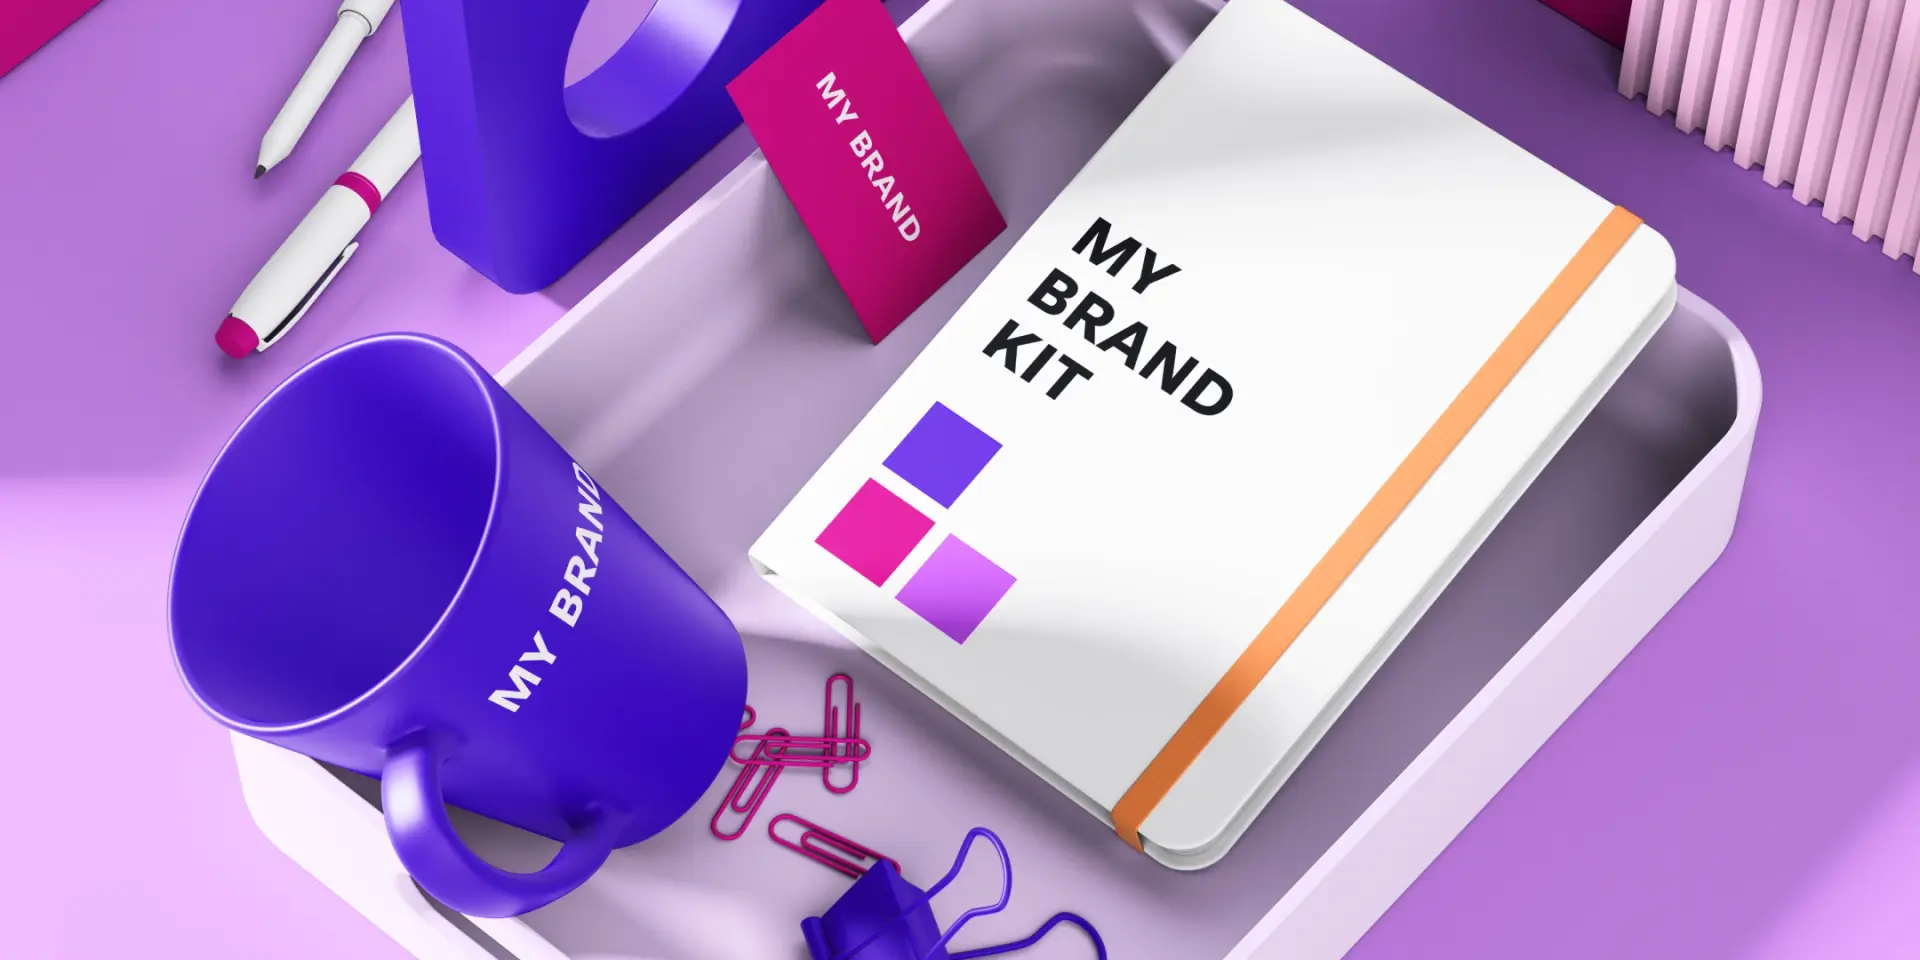 A Minimal & Professional Brand Logo, Complete Branding kit, & Brand Guide.